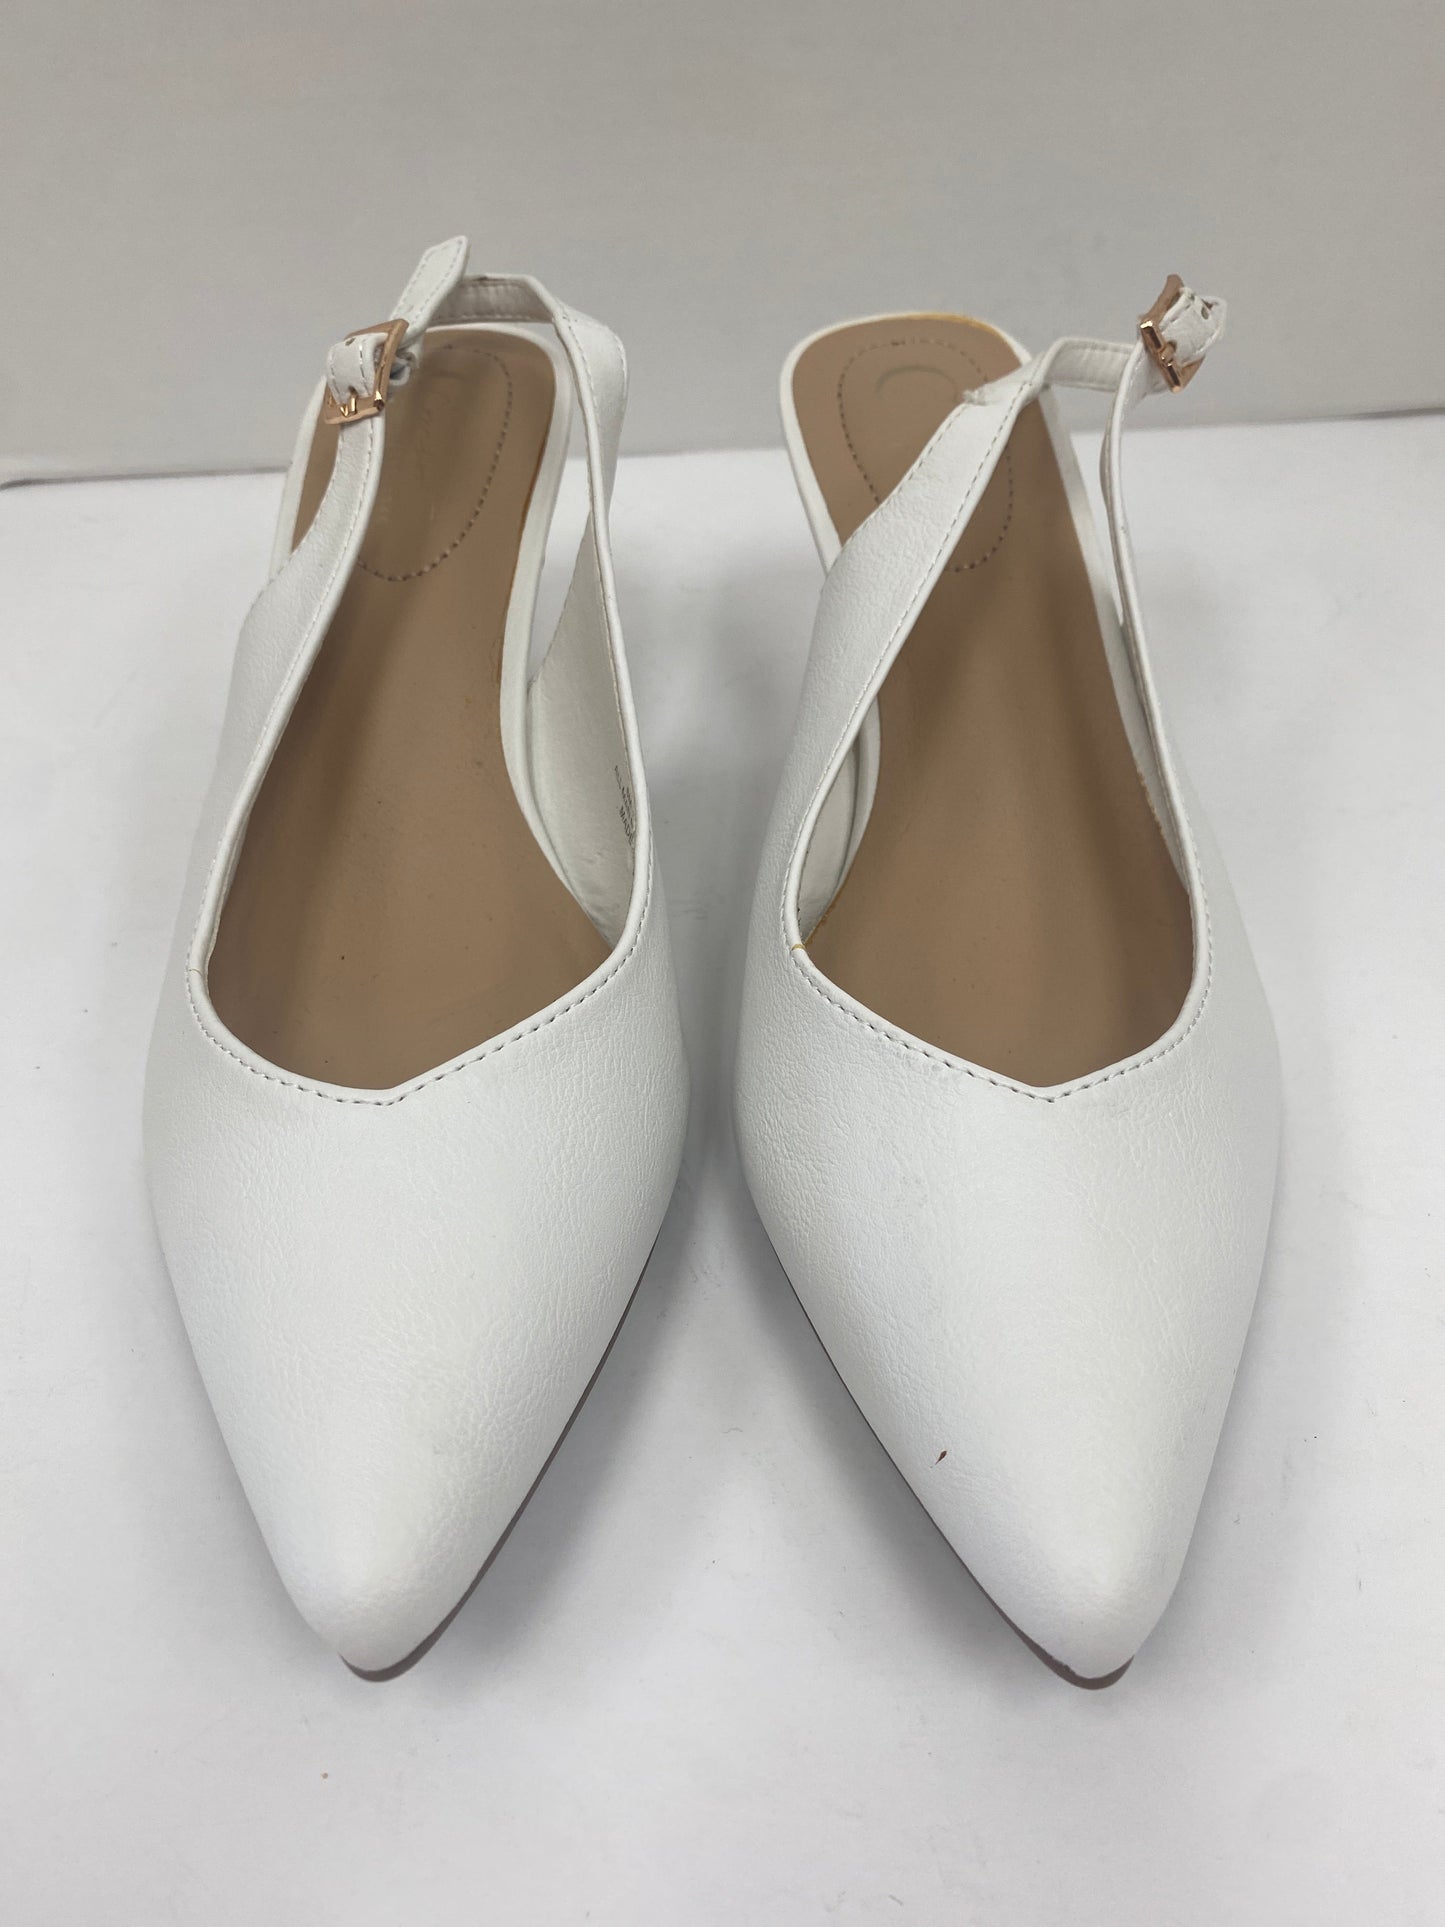 White Shoes Heels Kitten Cato, Size 8